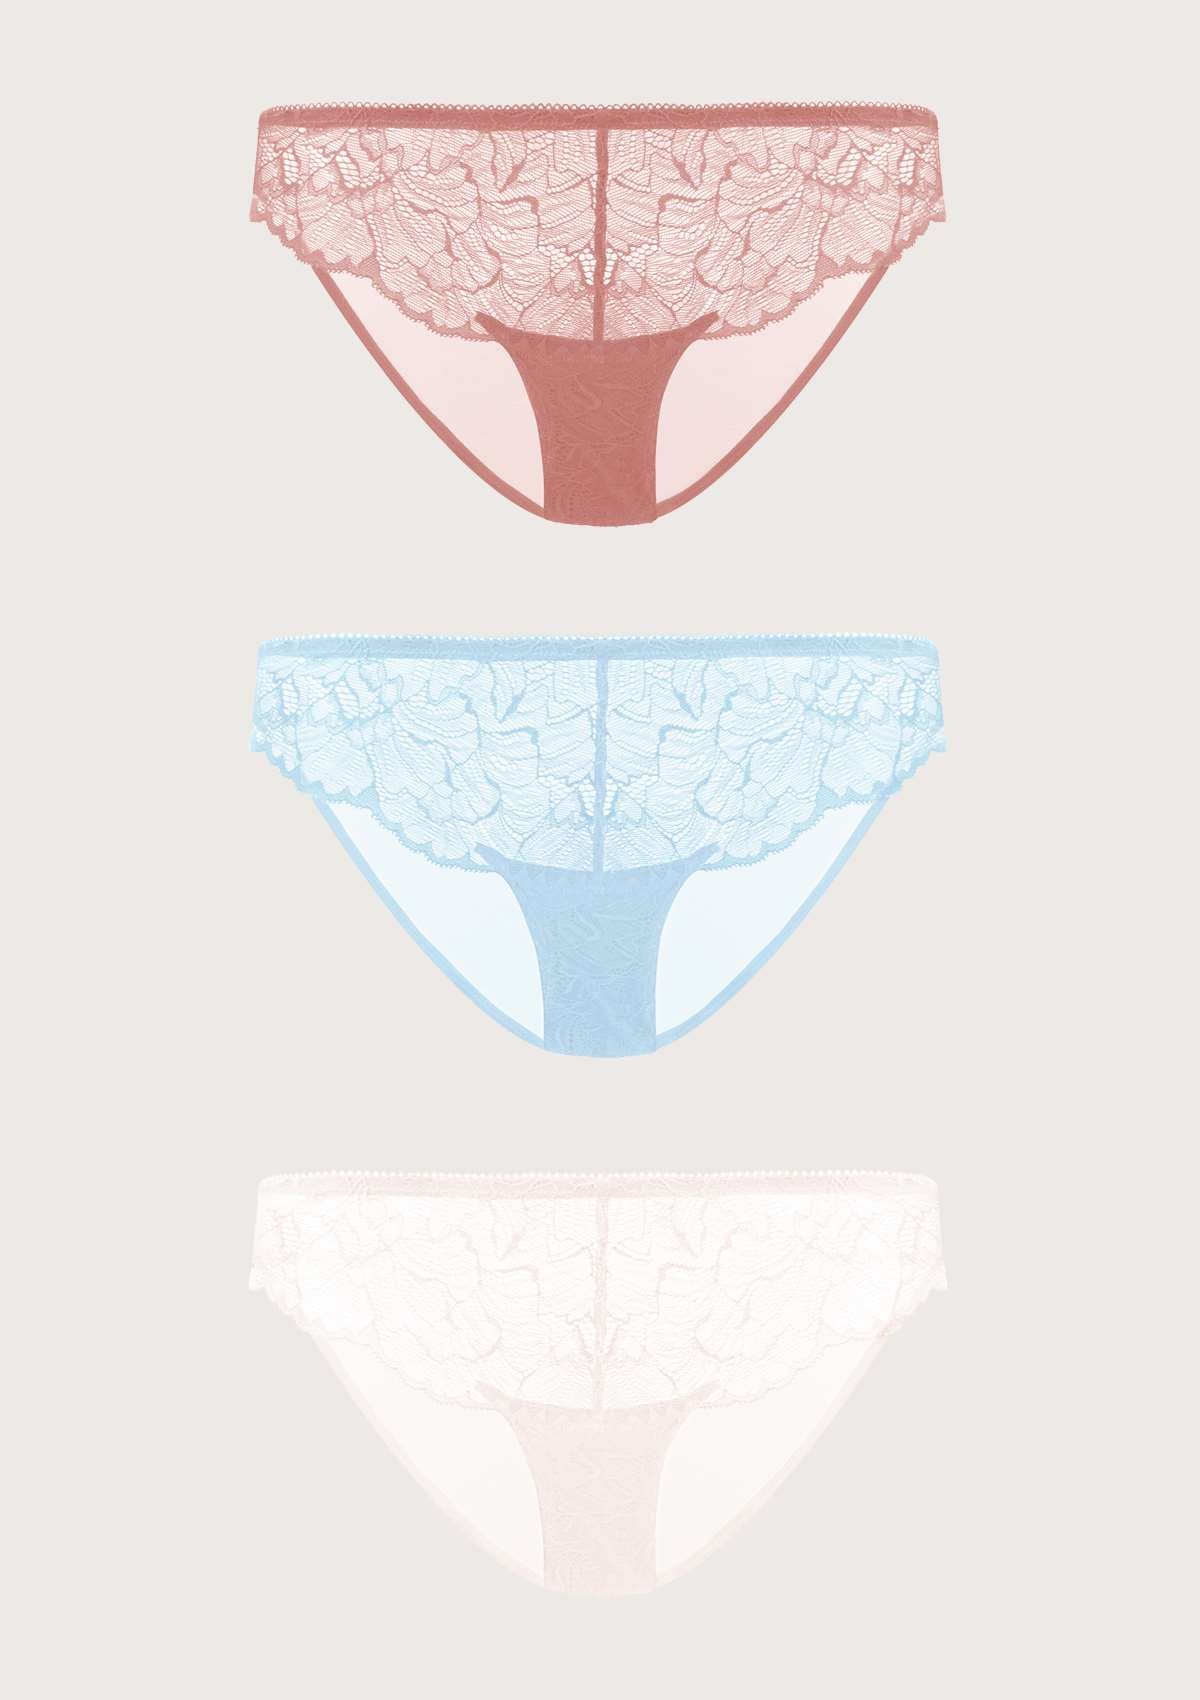 HSIA Blossom Lace Mesh Bikini Underwears 3 Pack - XXXL / Black+White+Dusty Peach